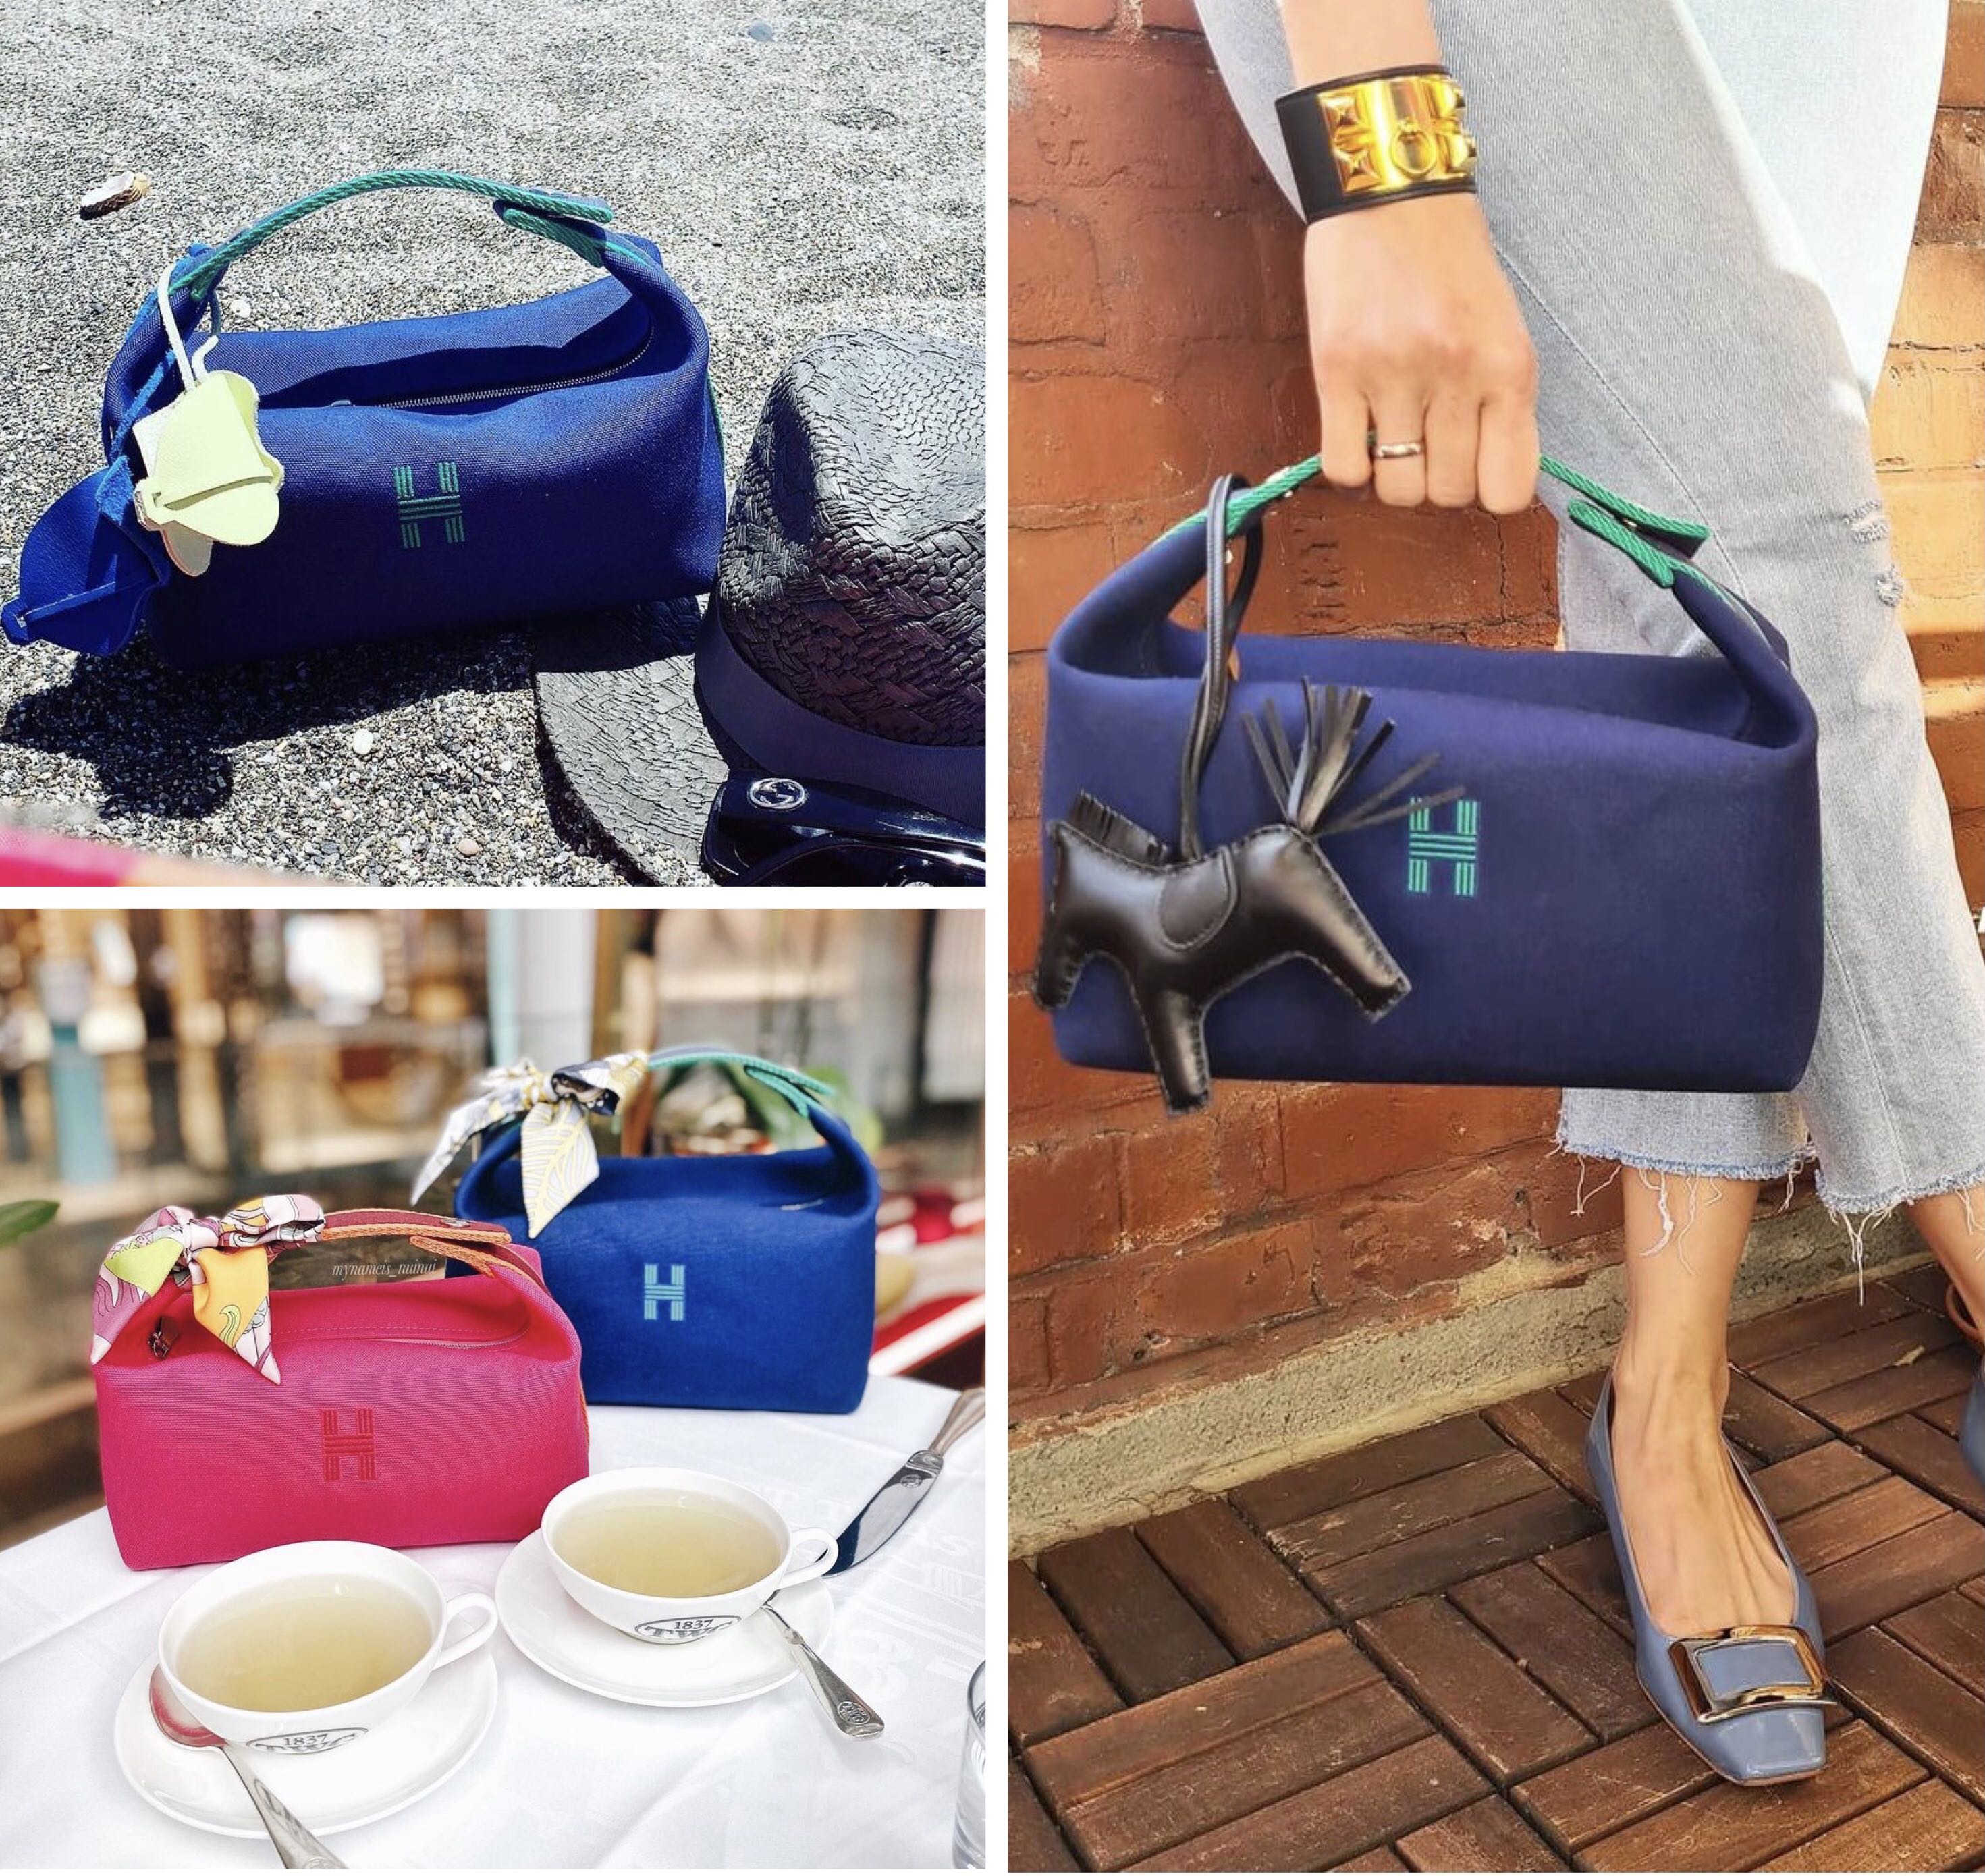 Bride-A-Brac Handbag GM size in Bleu Nuit – Diamonds in Dubai